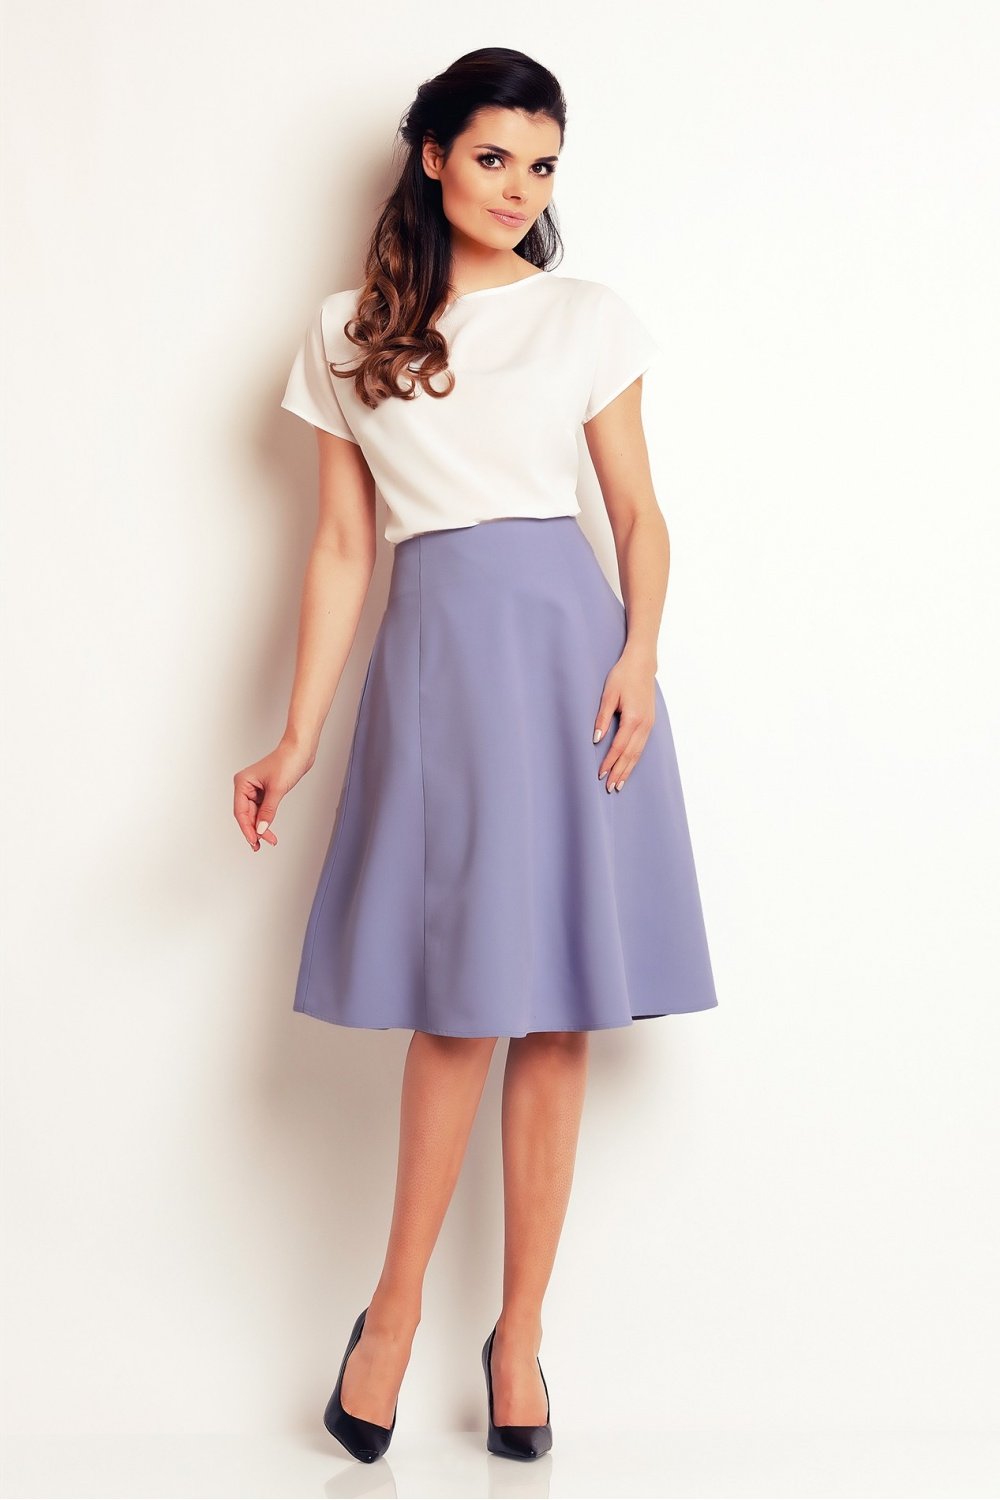 Skirt model 140016 awama Posh Styles Apparel